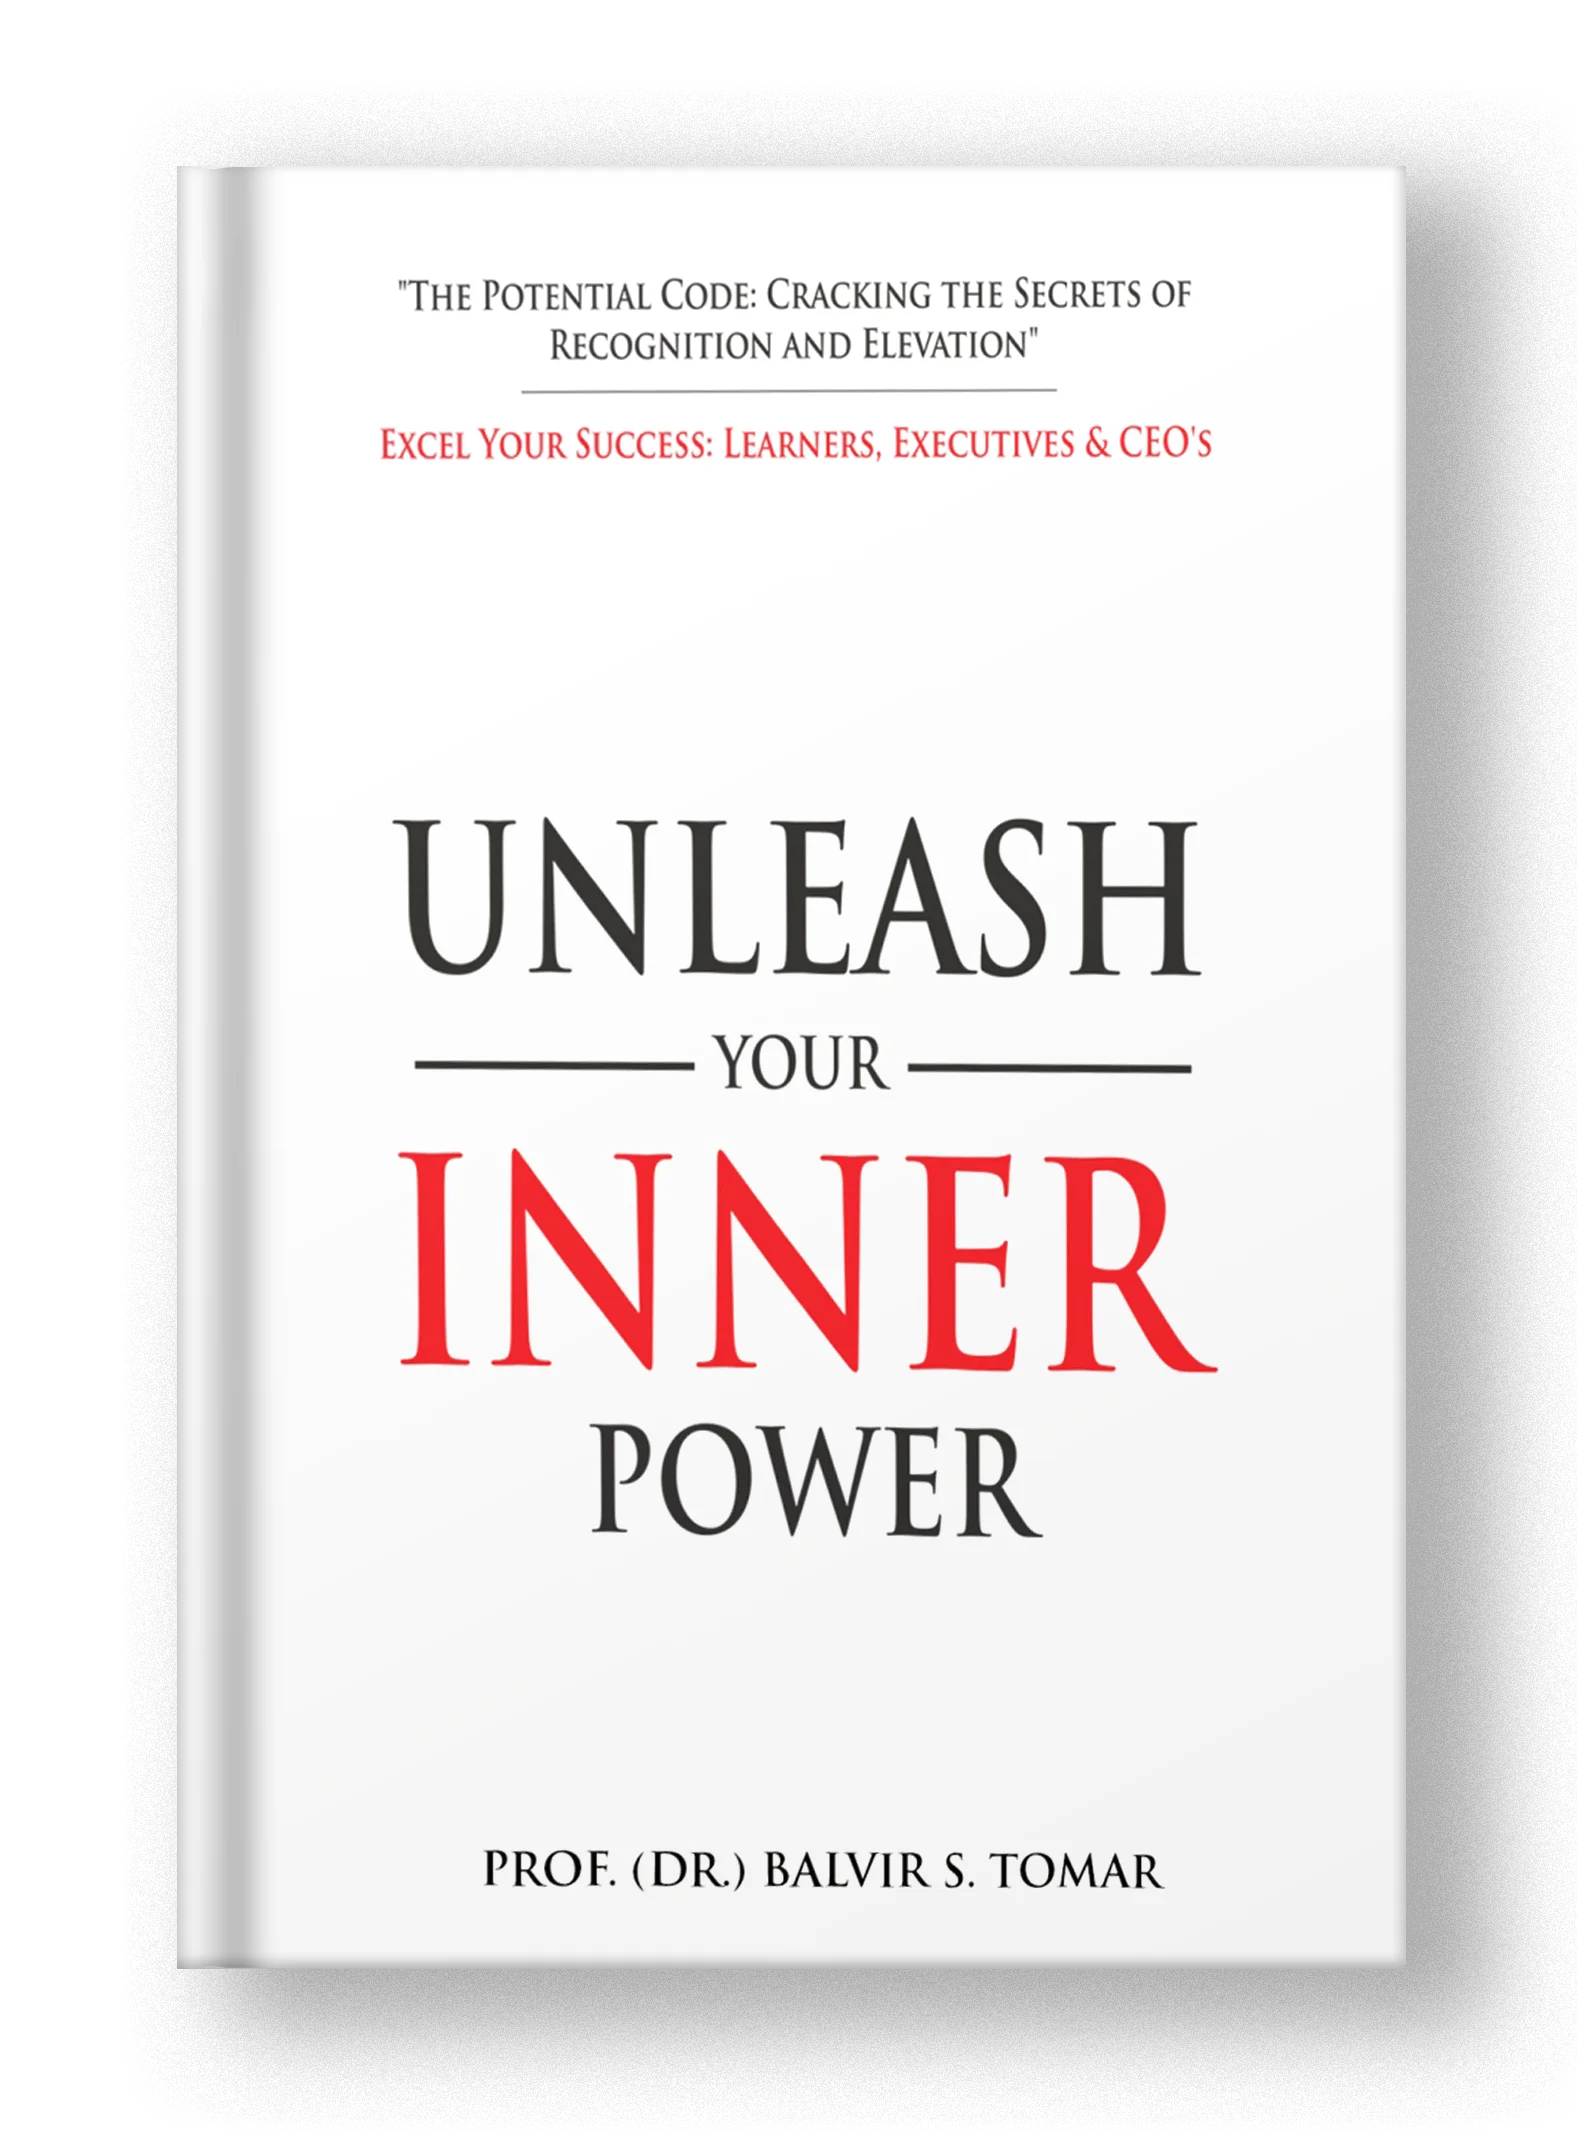 Unleash your inner power - Dr. Balvir S. Tomar